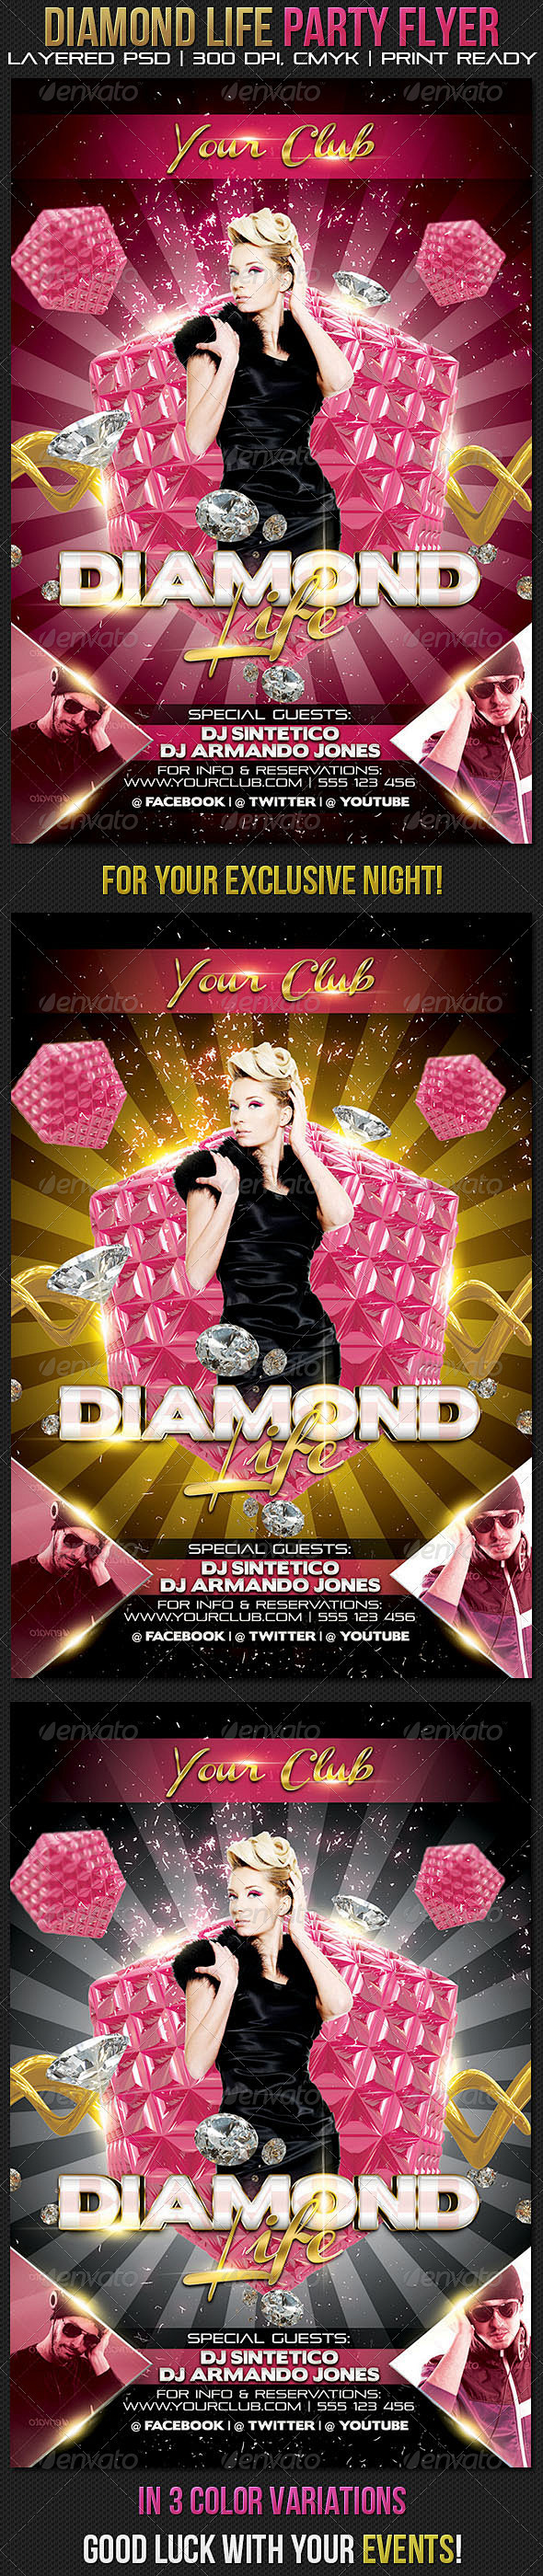 Diamond Life Party F...